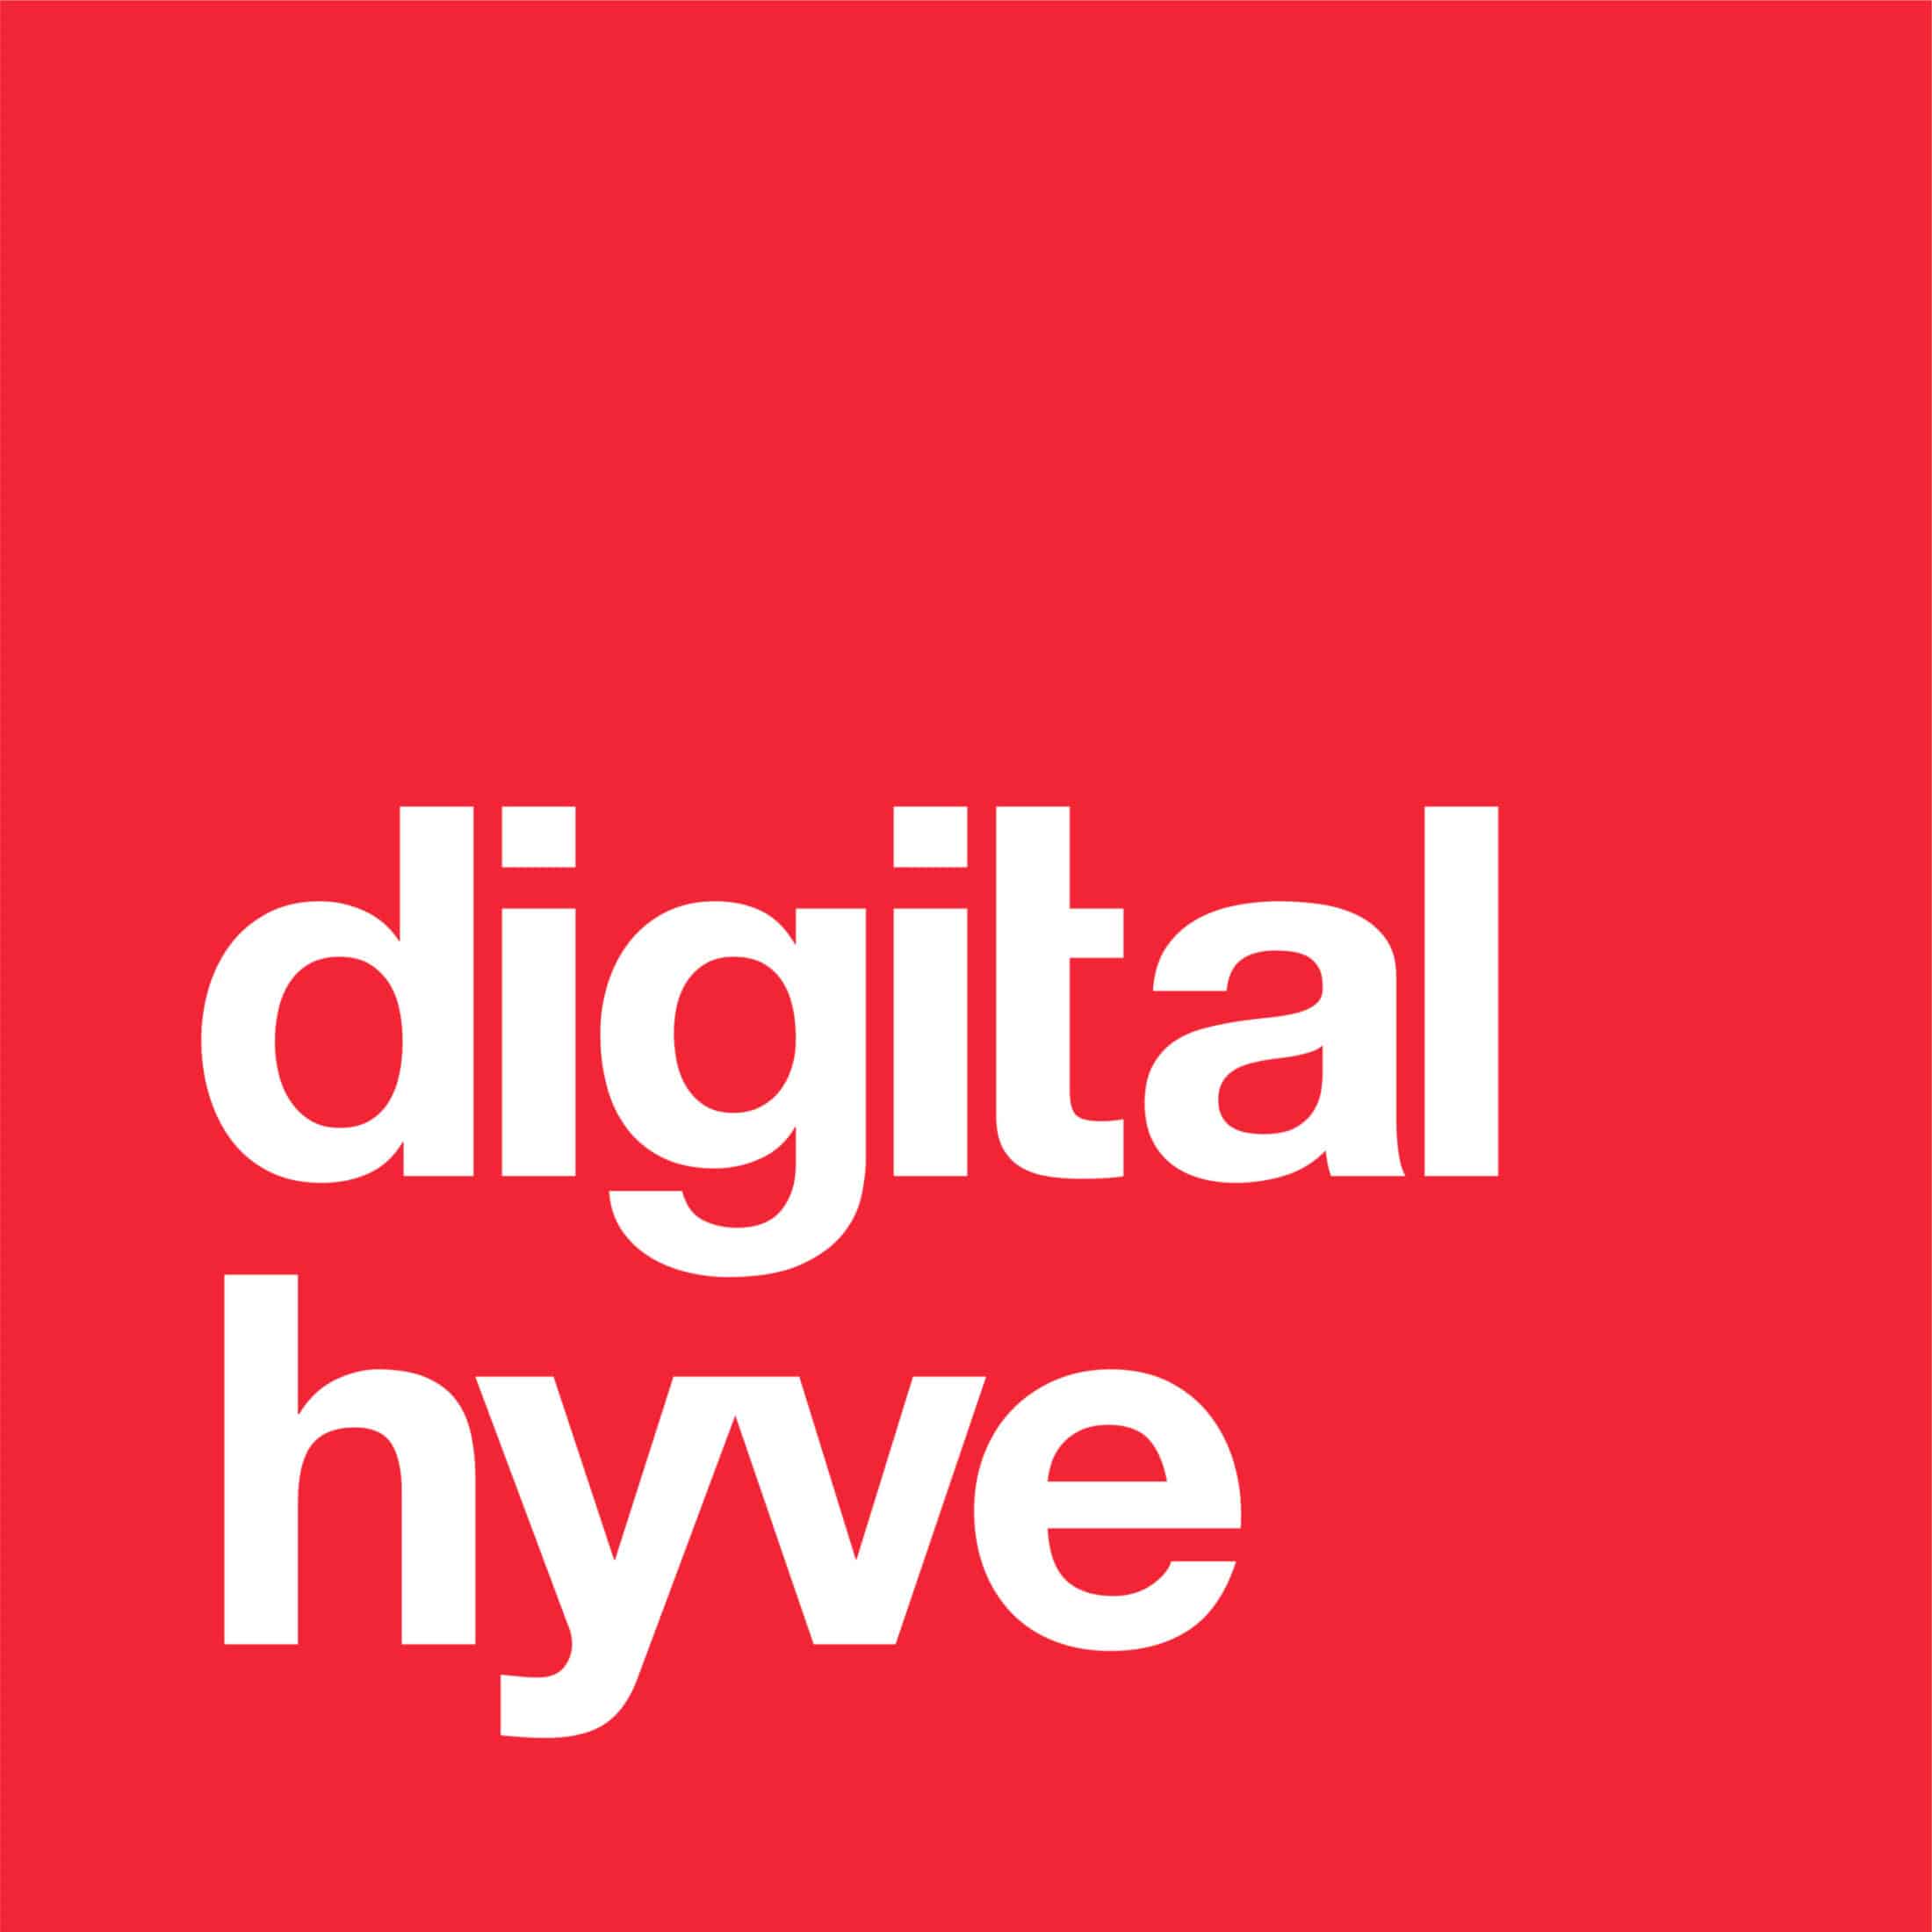 Digital Hyve